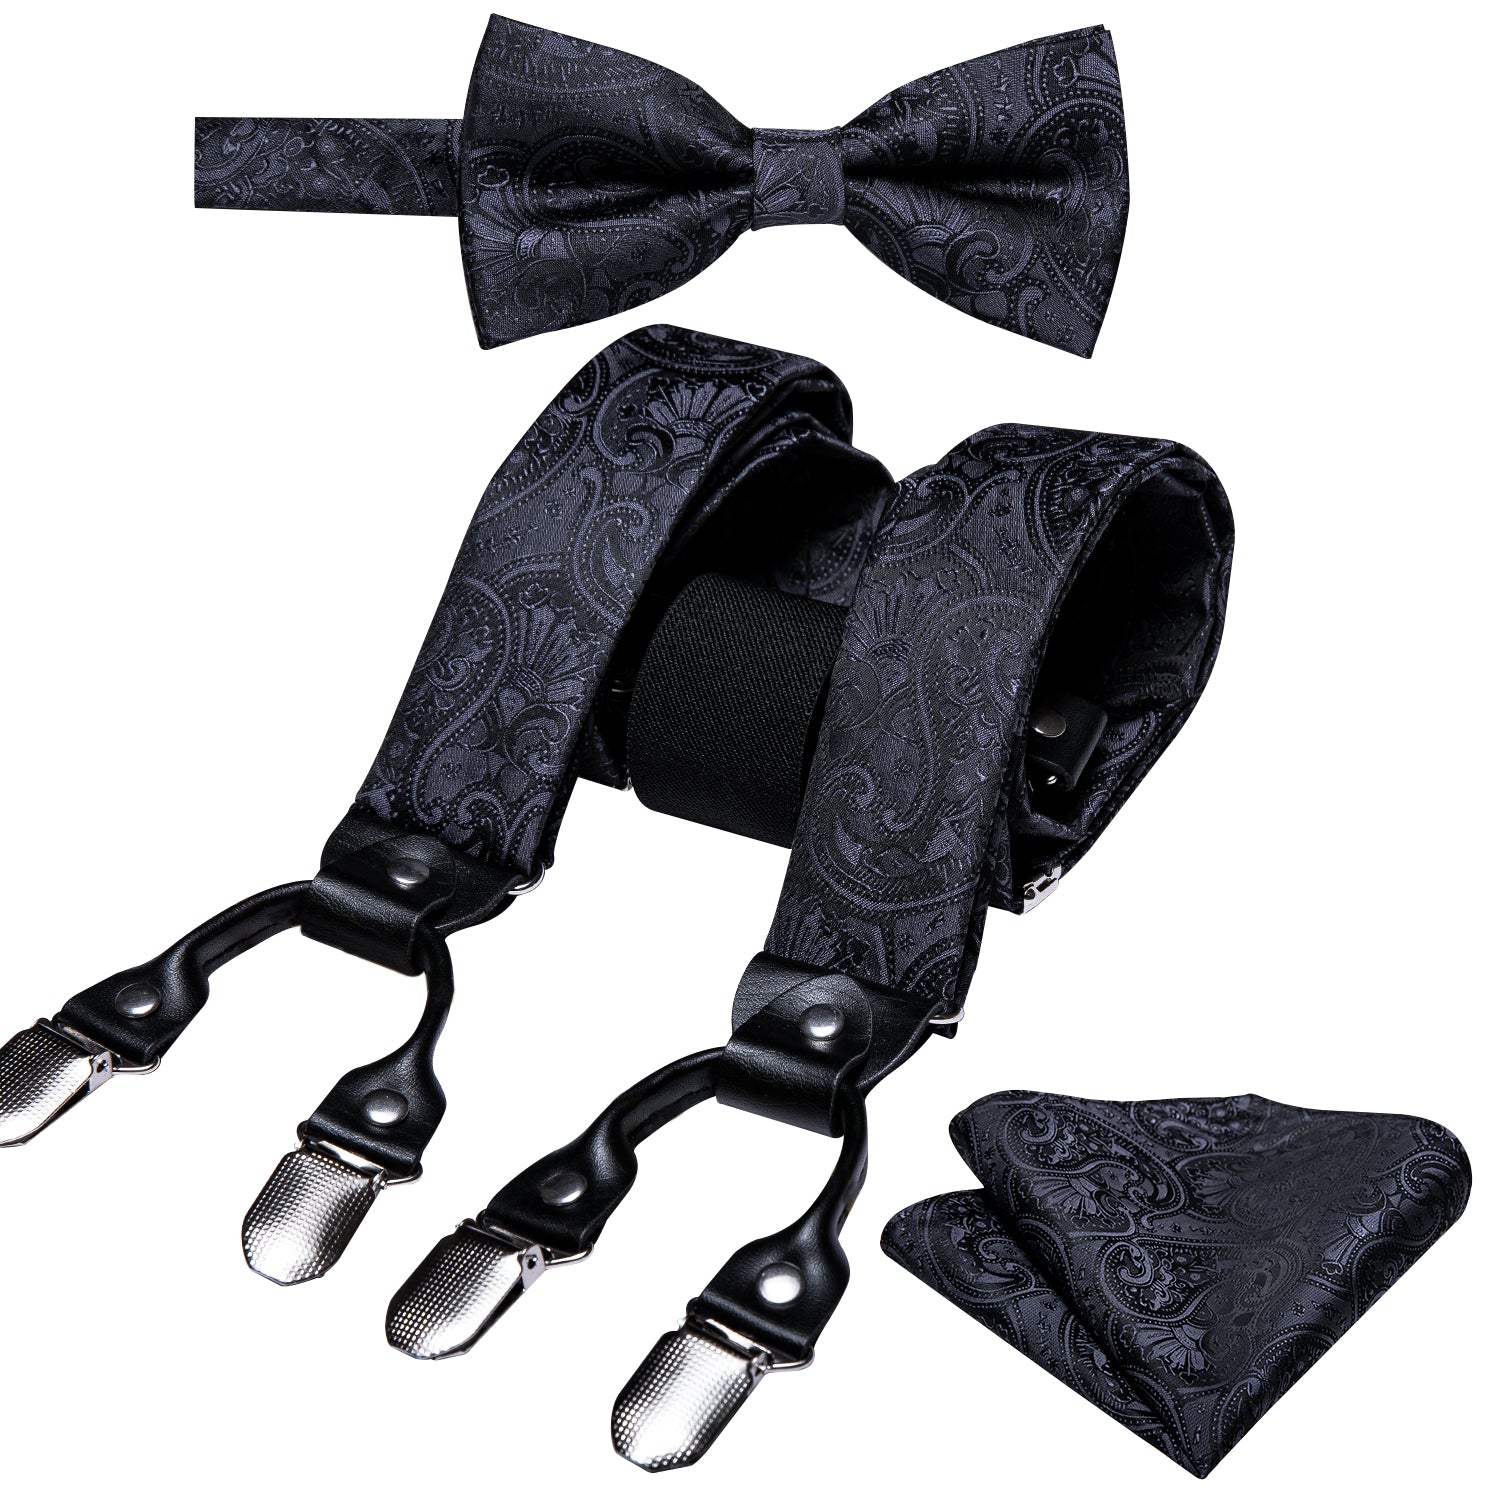 Barry.wang Black Tie Floral Y Back Adjustable Bow Tie Suspenders Set